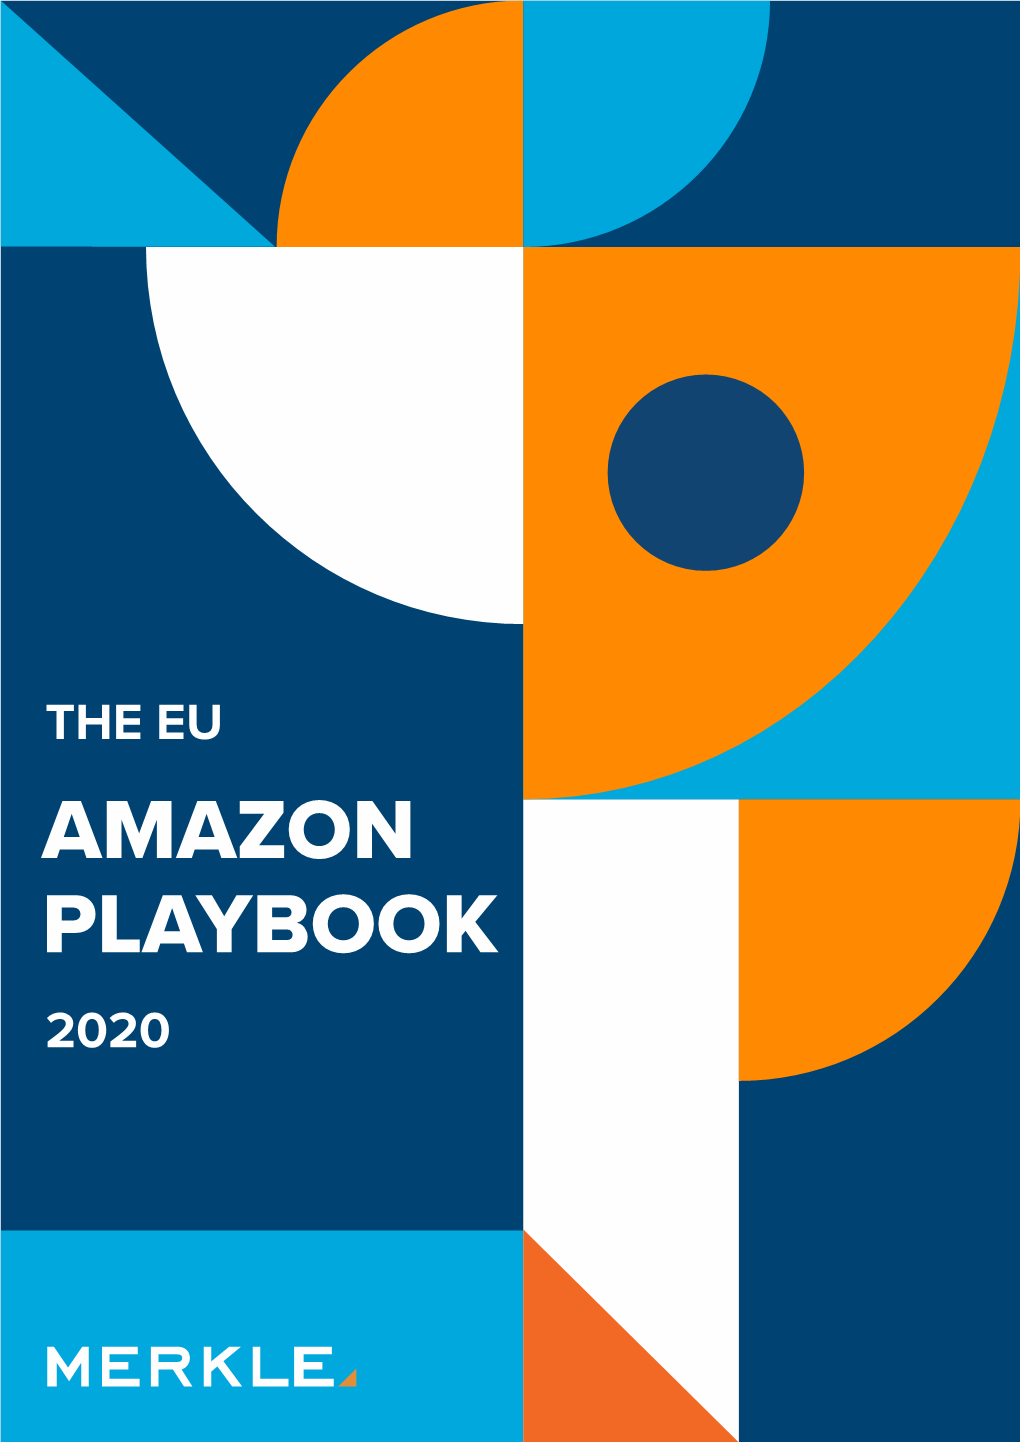 Amazon Playbook 2020 Contents